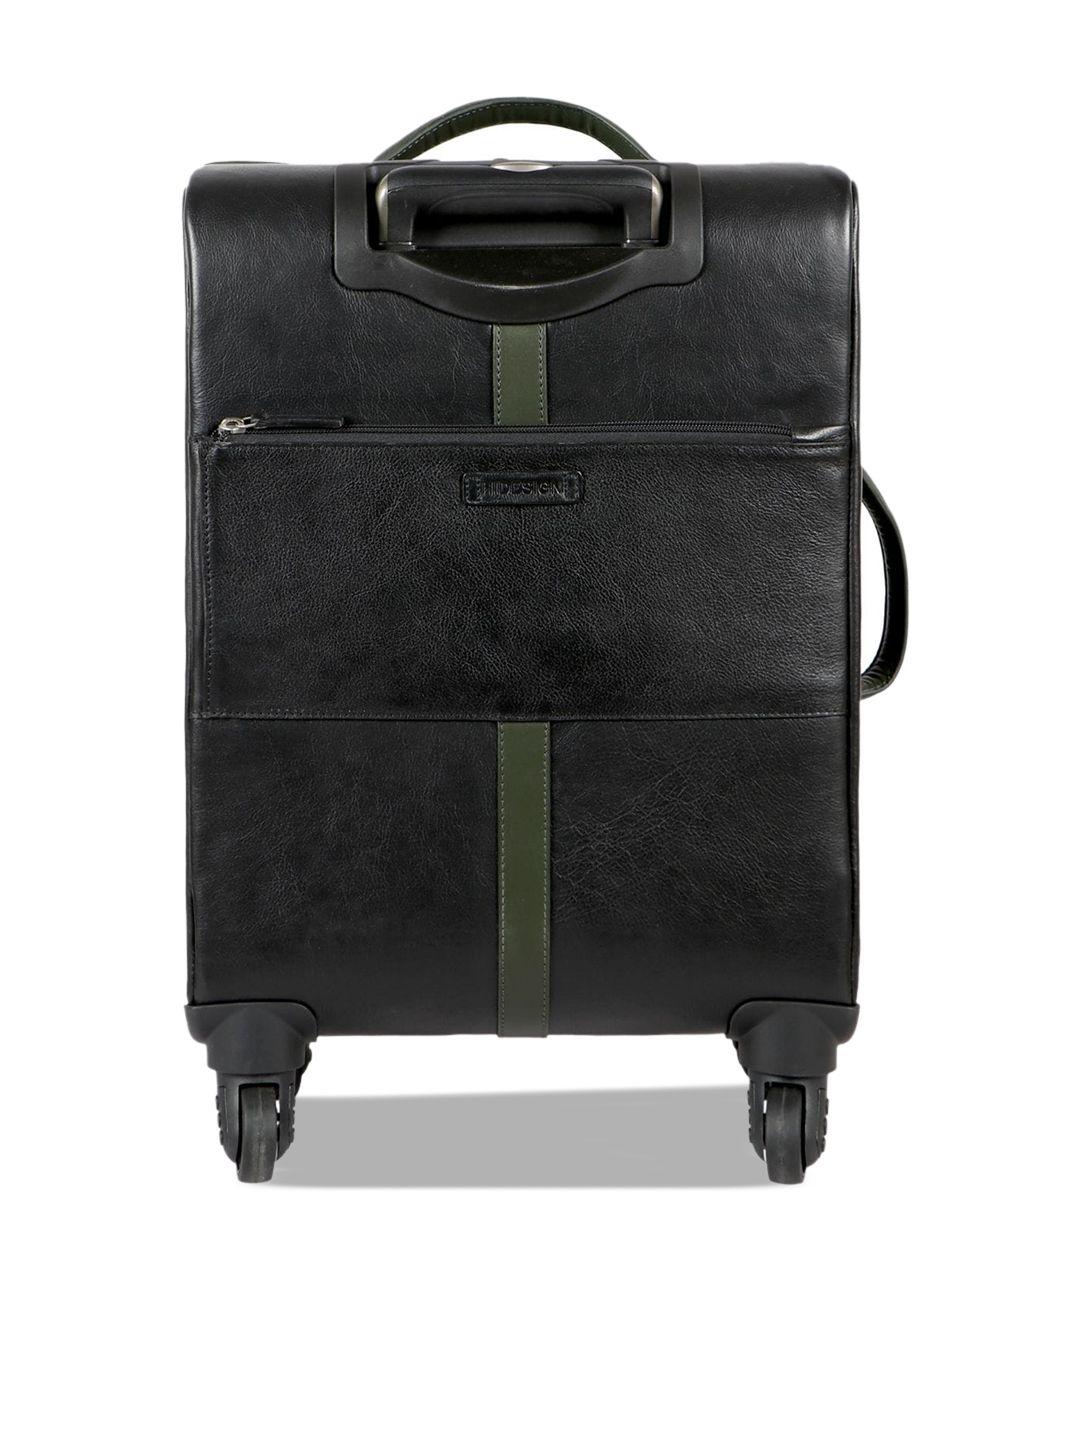 hidesign-black-solid-medium-leather-trolley-suitcase